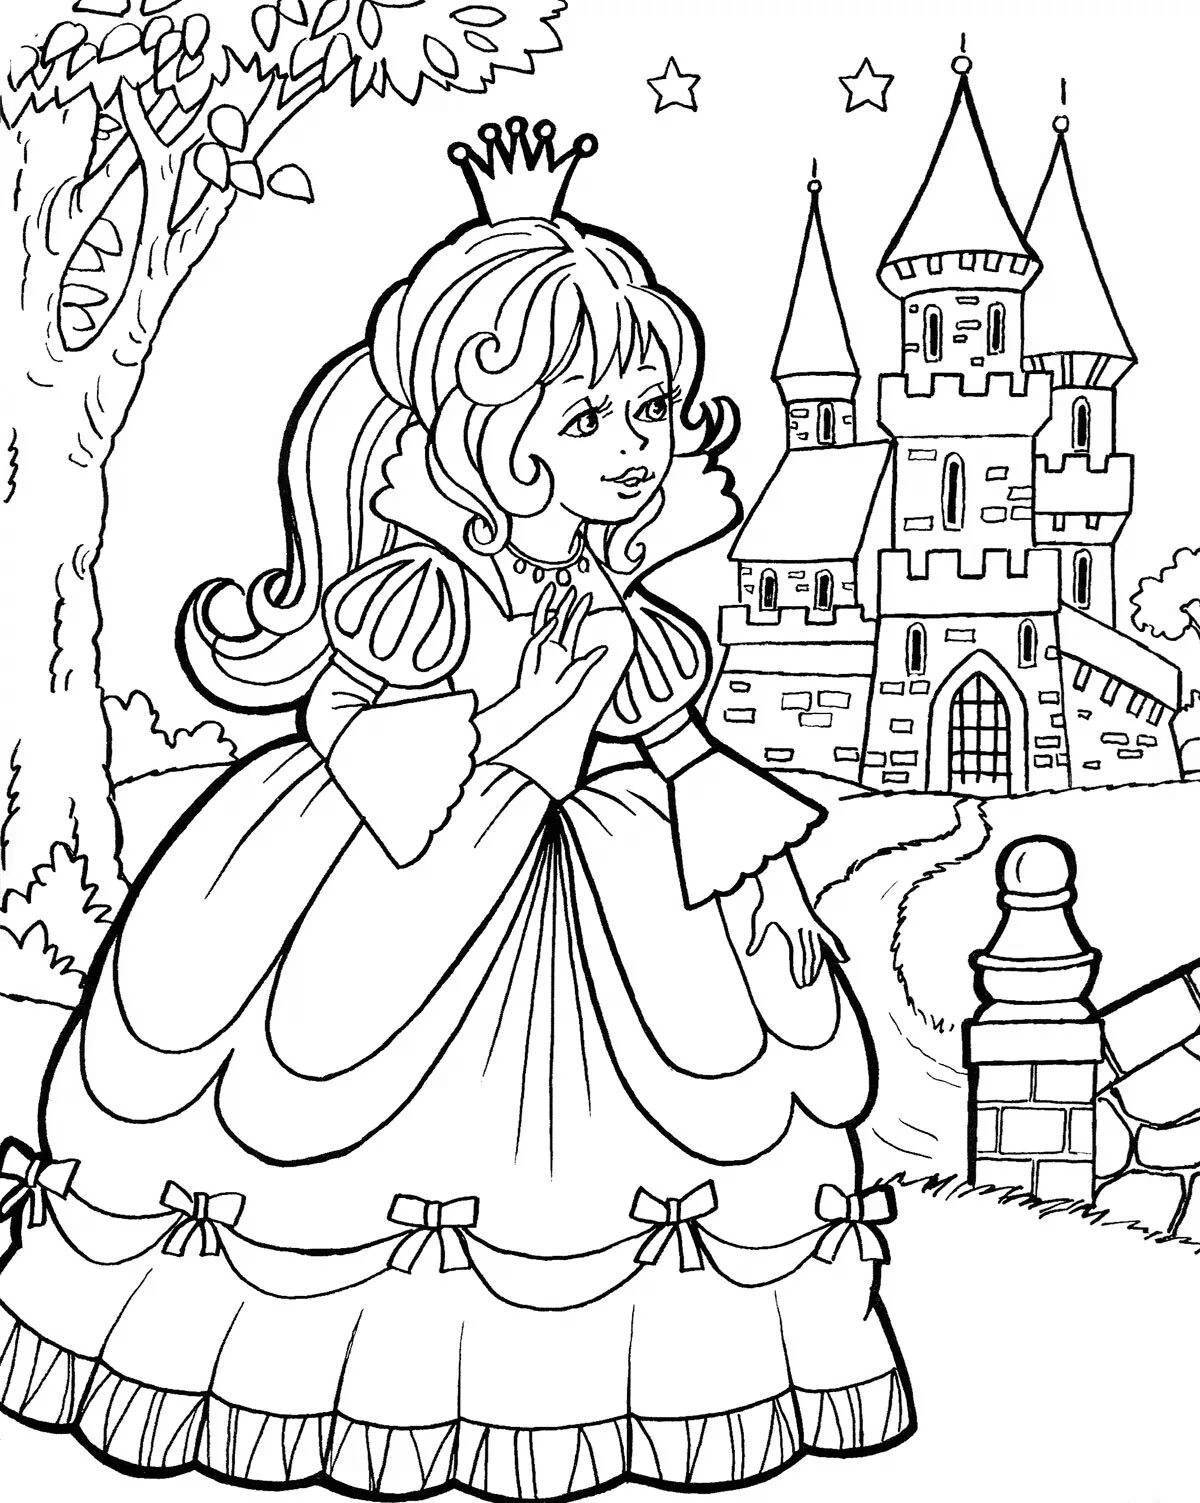 Princess in the castle #12